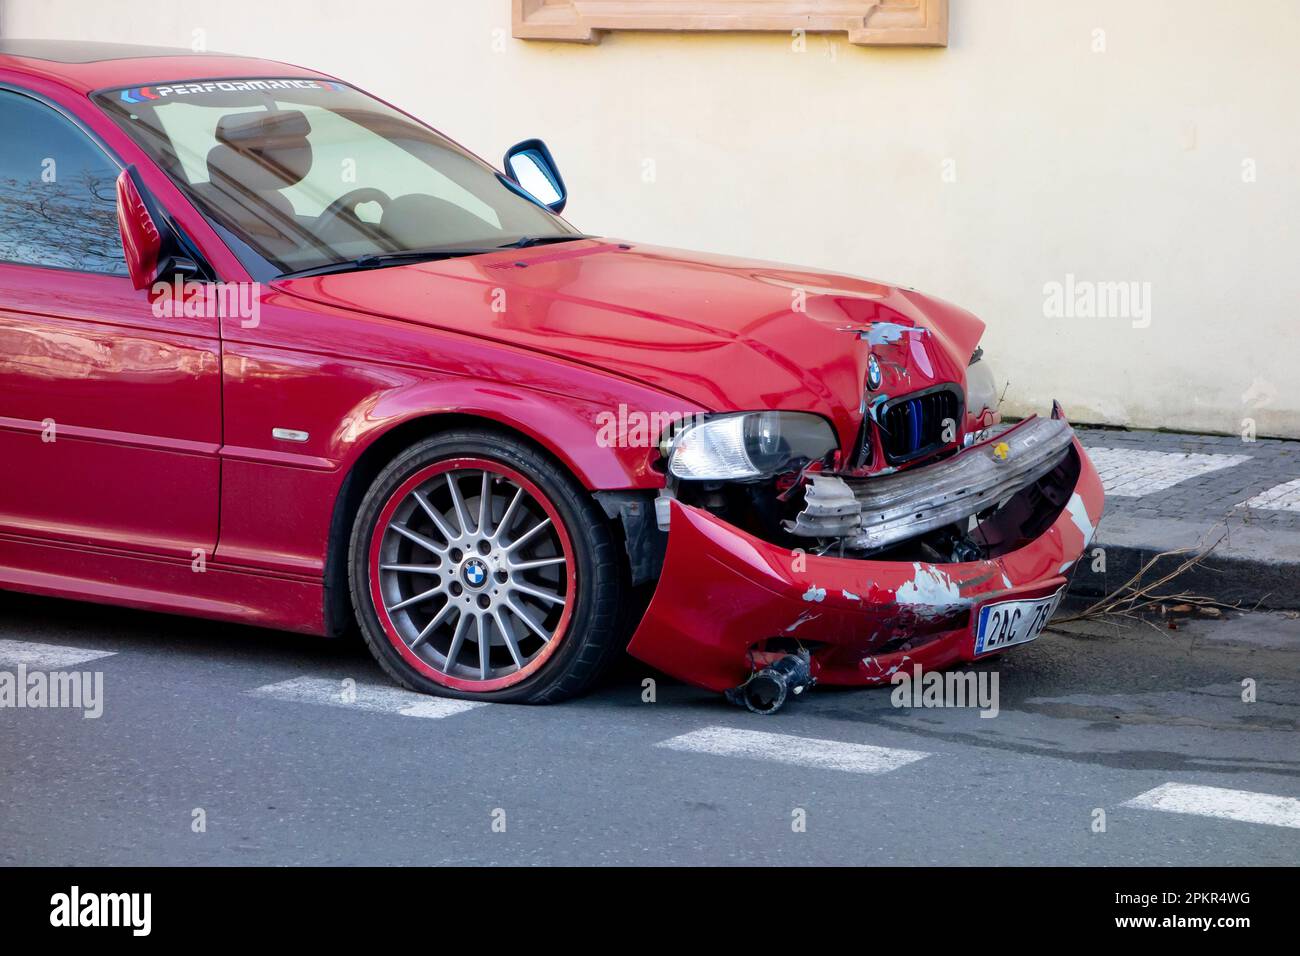 PRAGUE, CZECH REPUBLIC - NOVEMBER 13, 2022: Damaged BMW 3-Series E46 Coupe after frontal crash on a street Stock Photo